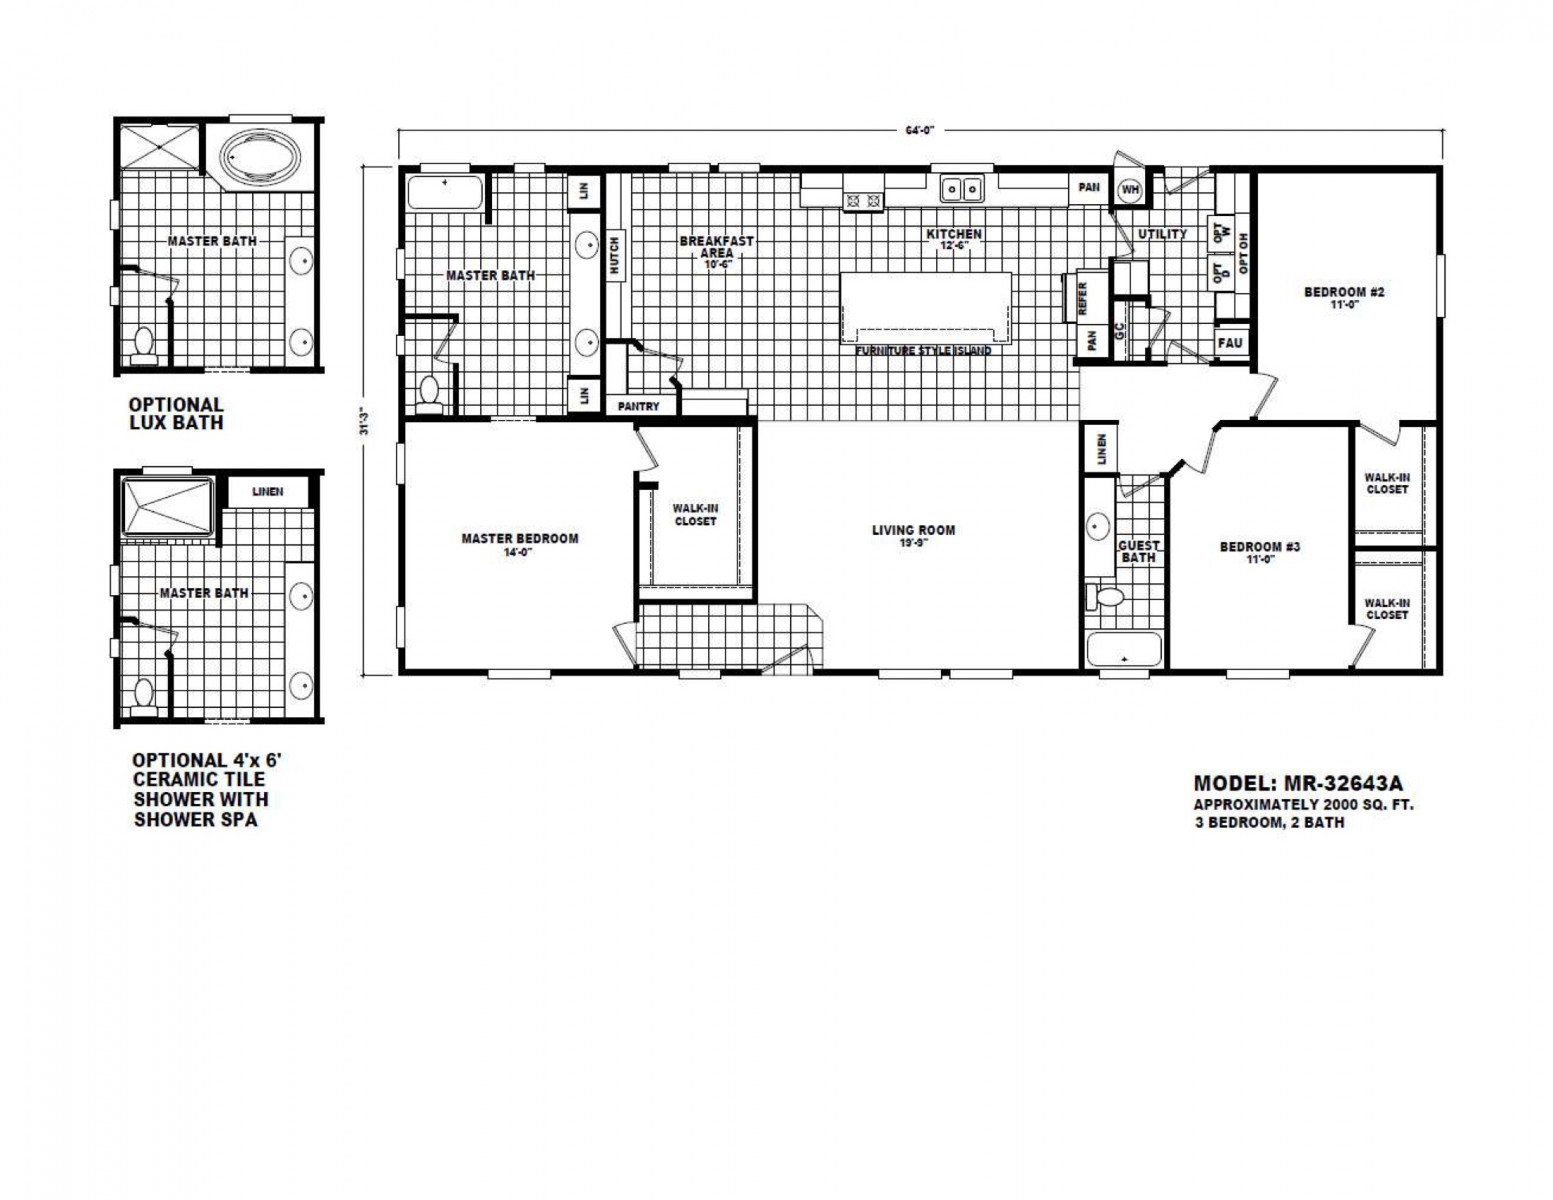 Homes Direct Modular Homes - Model MR32643A - Floorplan